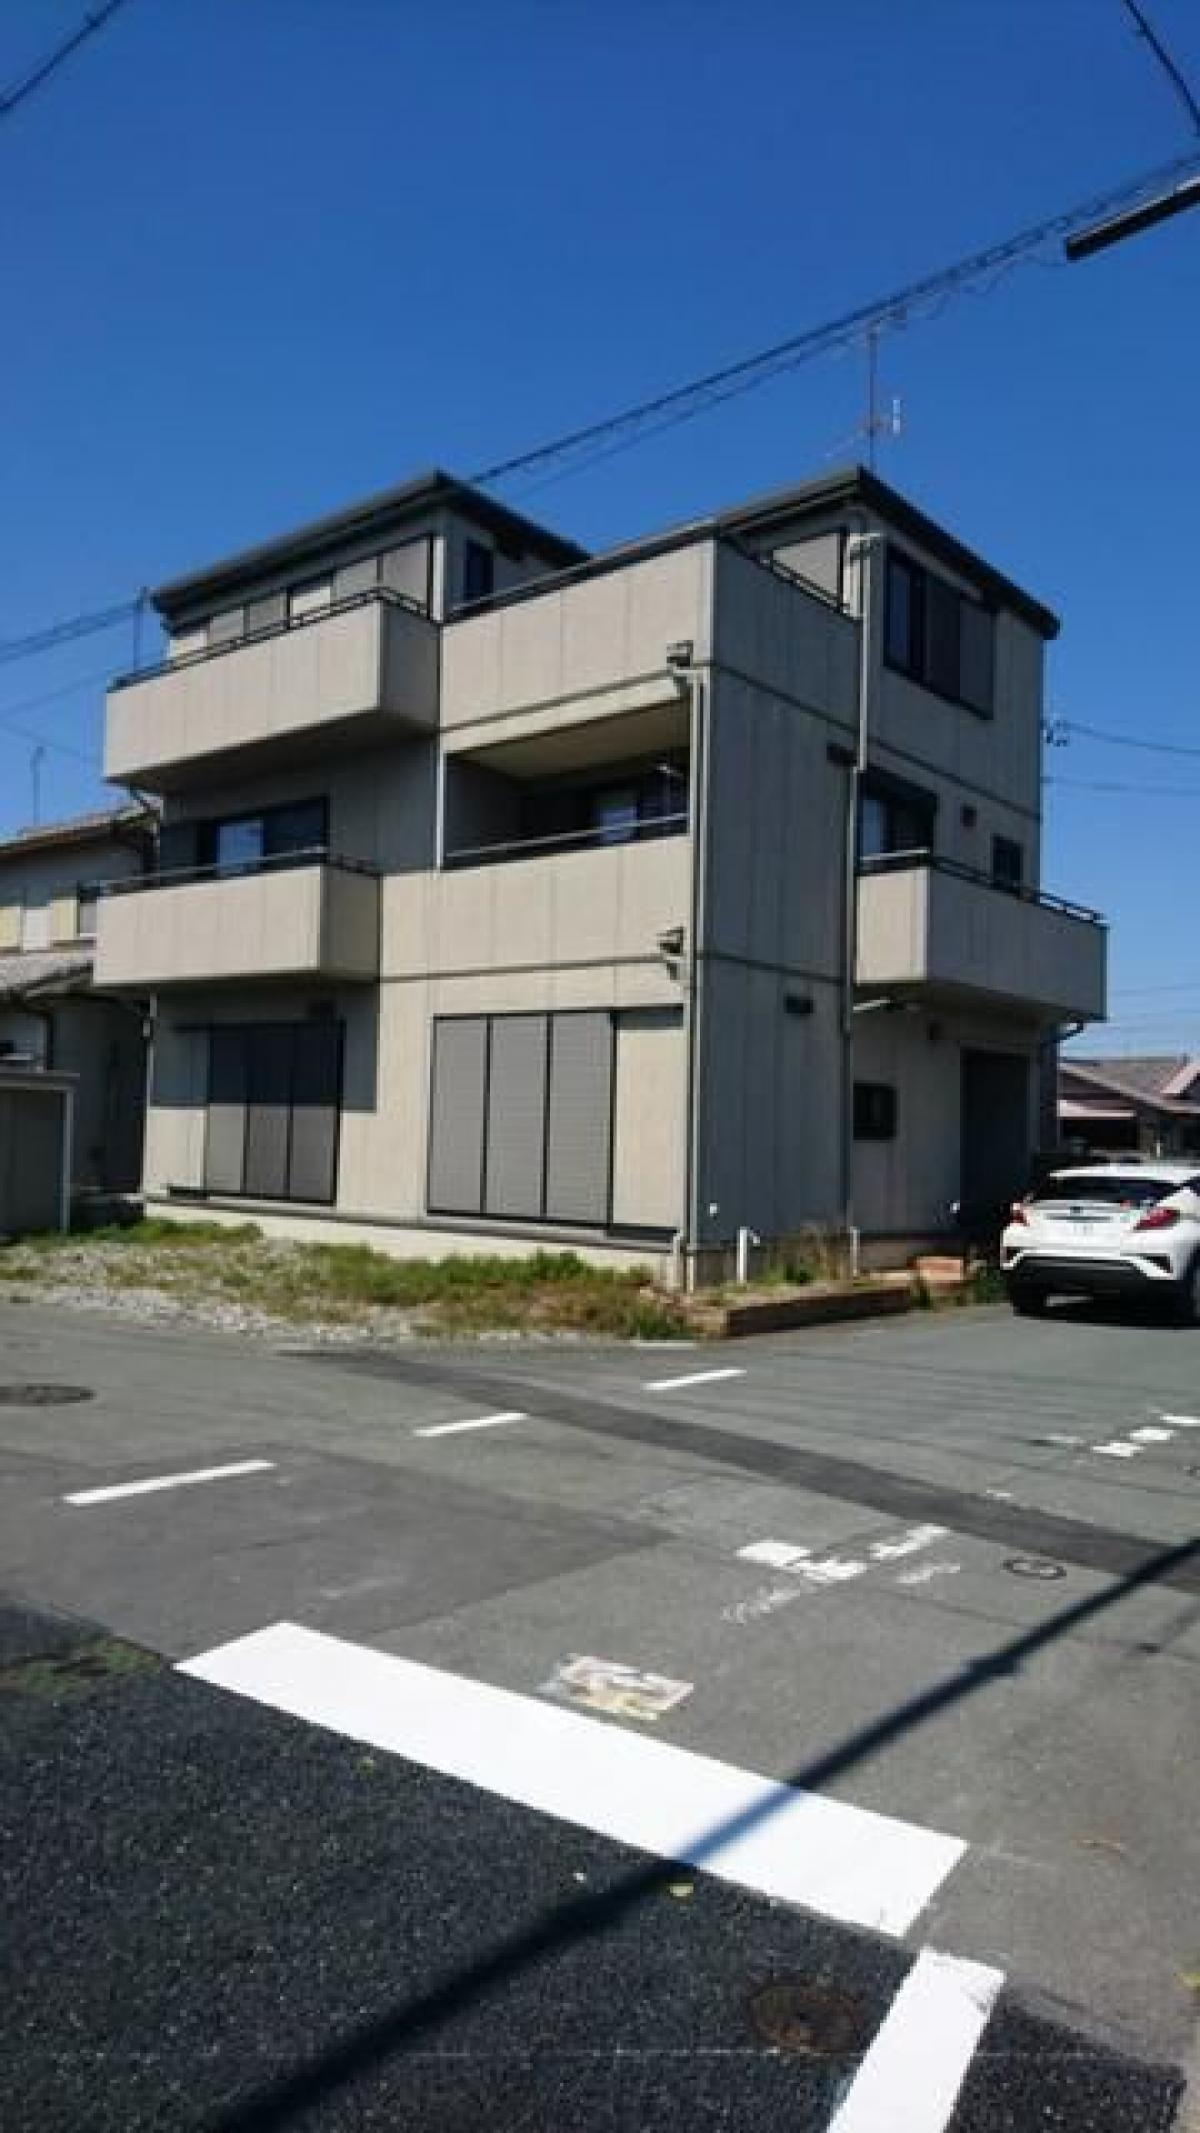 Picture of Home For Sale in Fukuroi Shi, Shizuoka, Japan